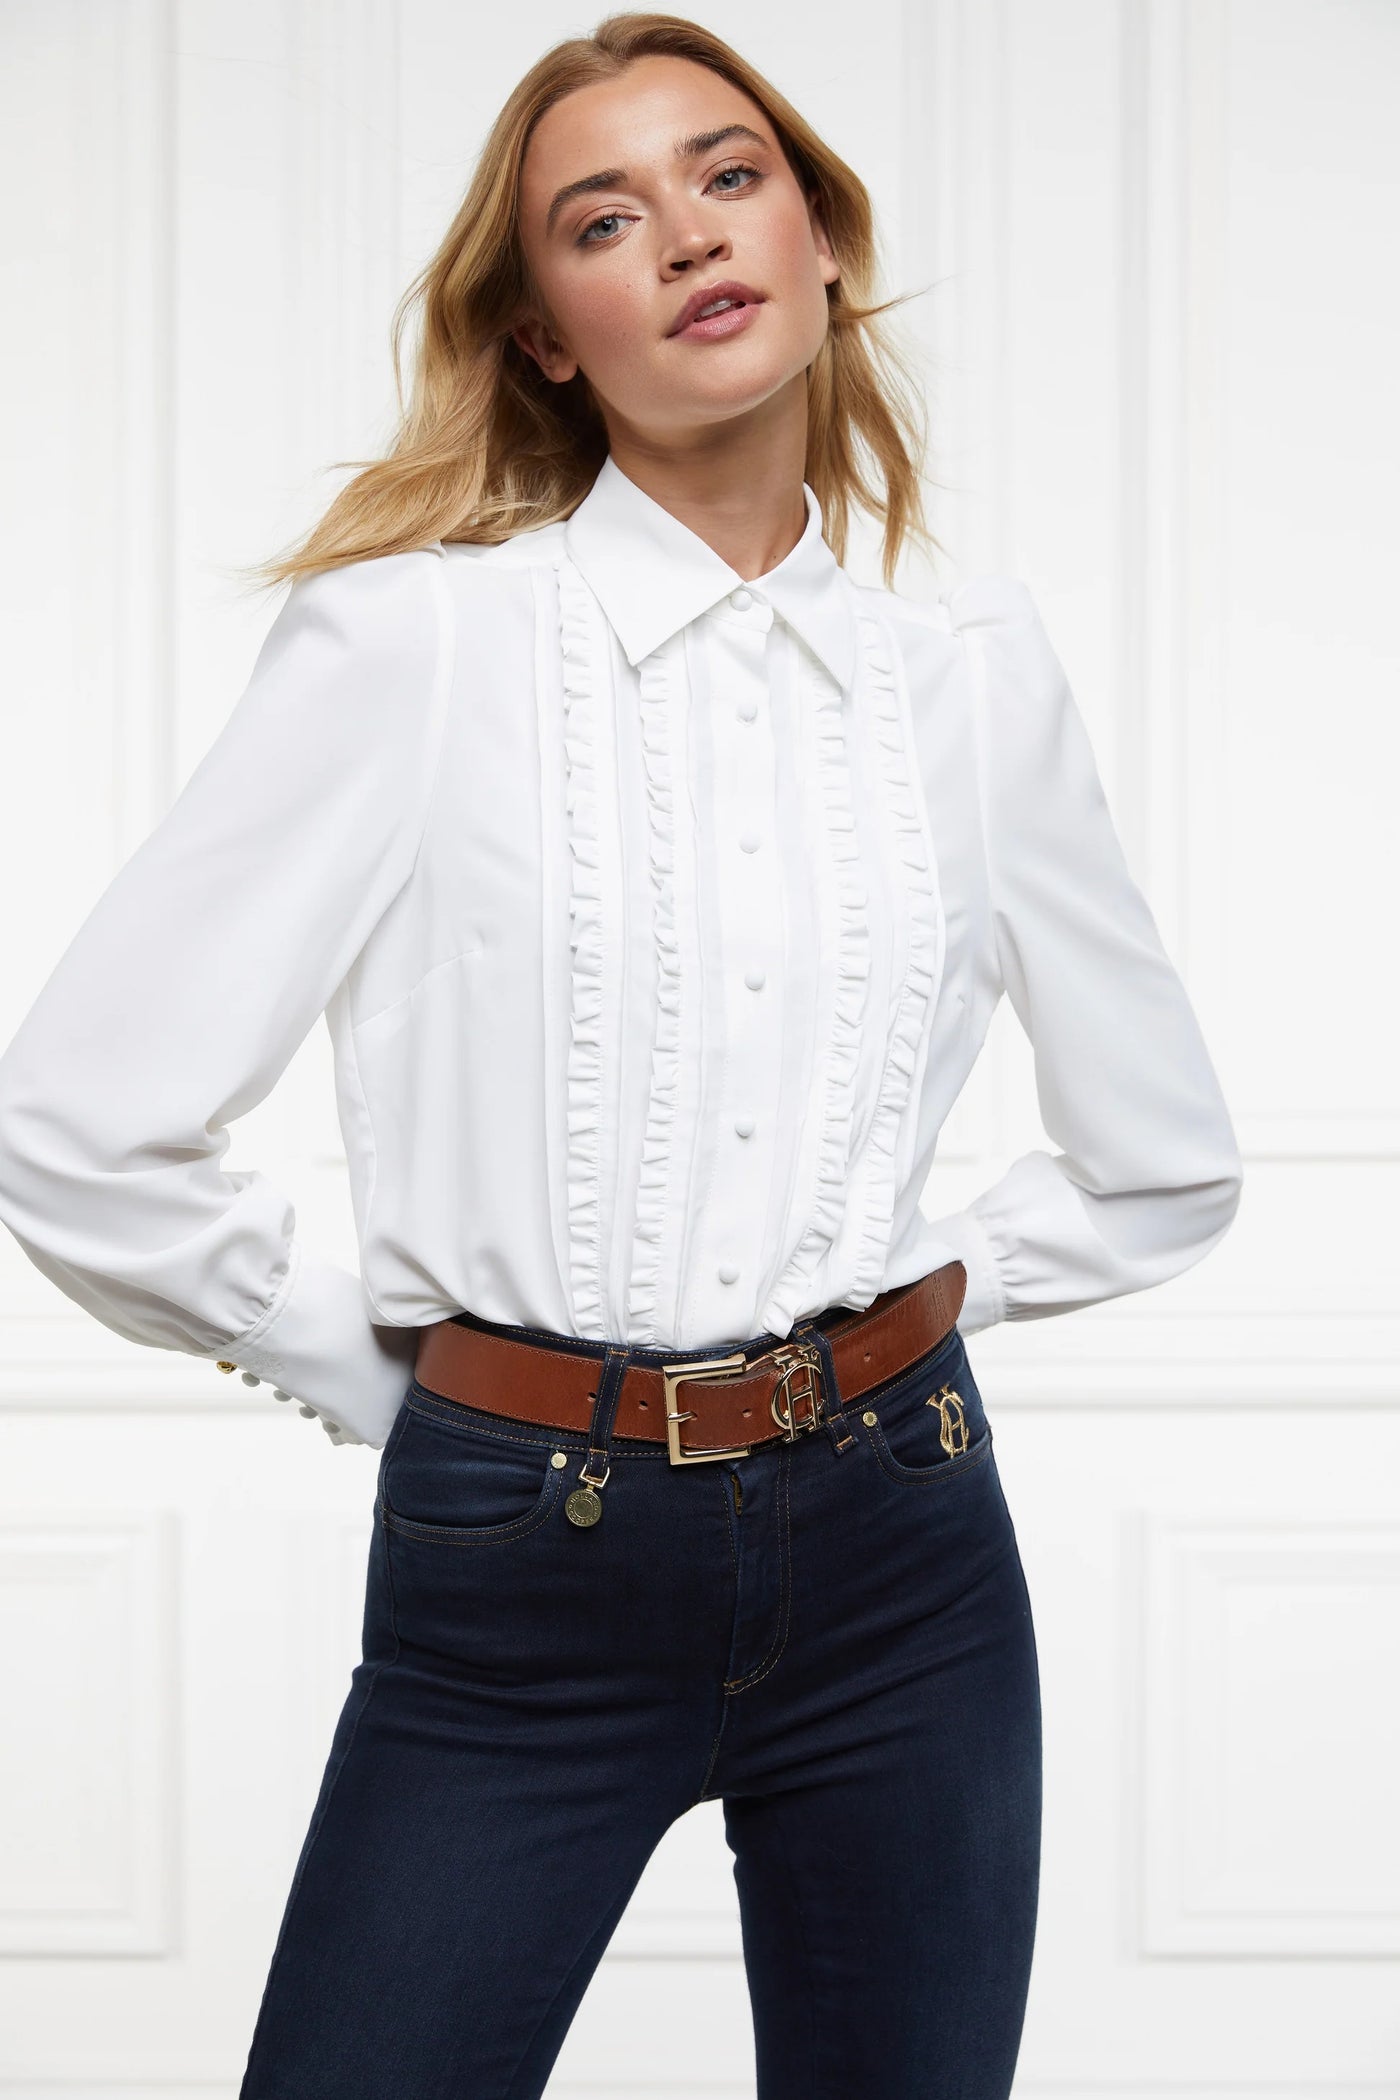 Holland Cooper Clarissa Ladies Shirt in White